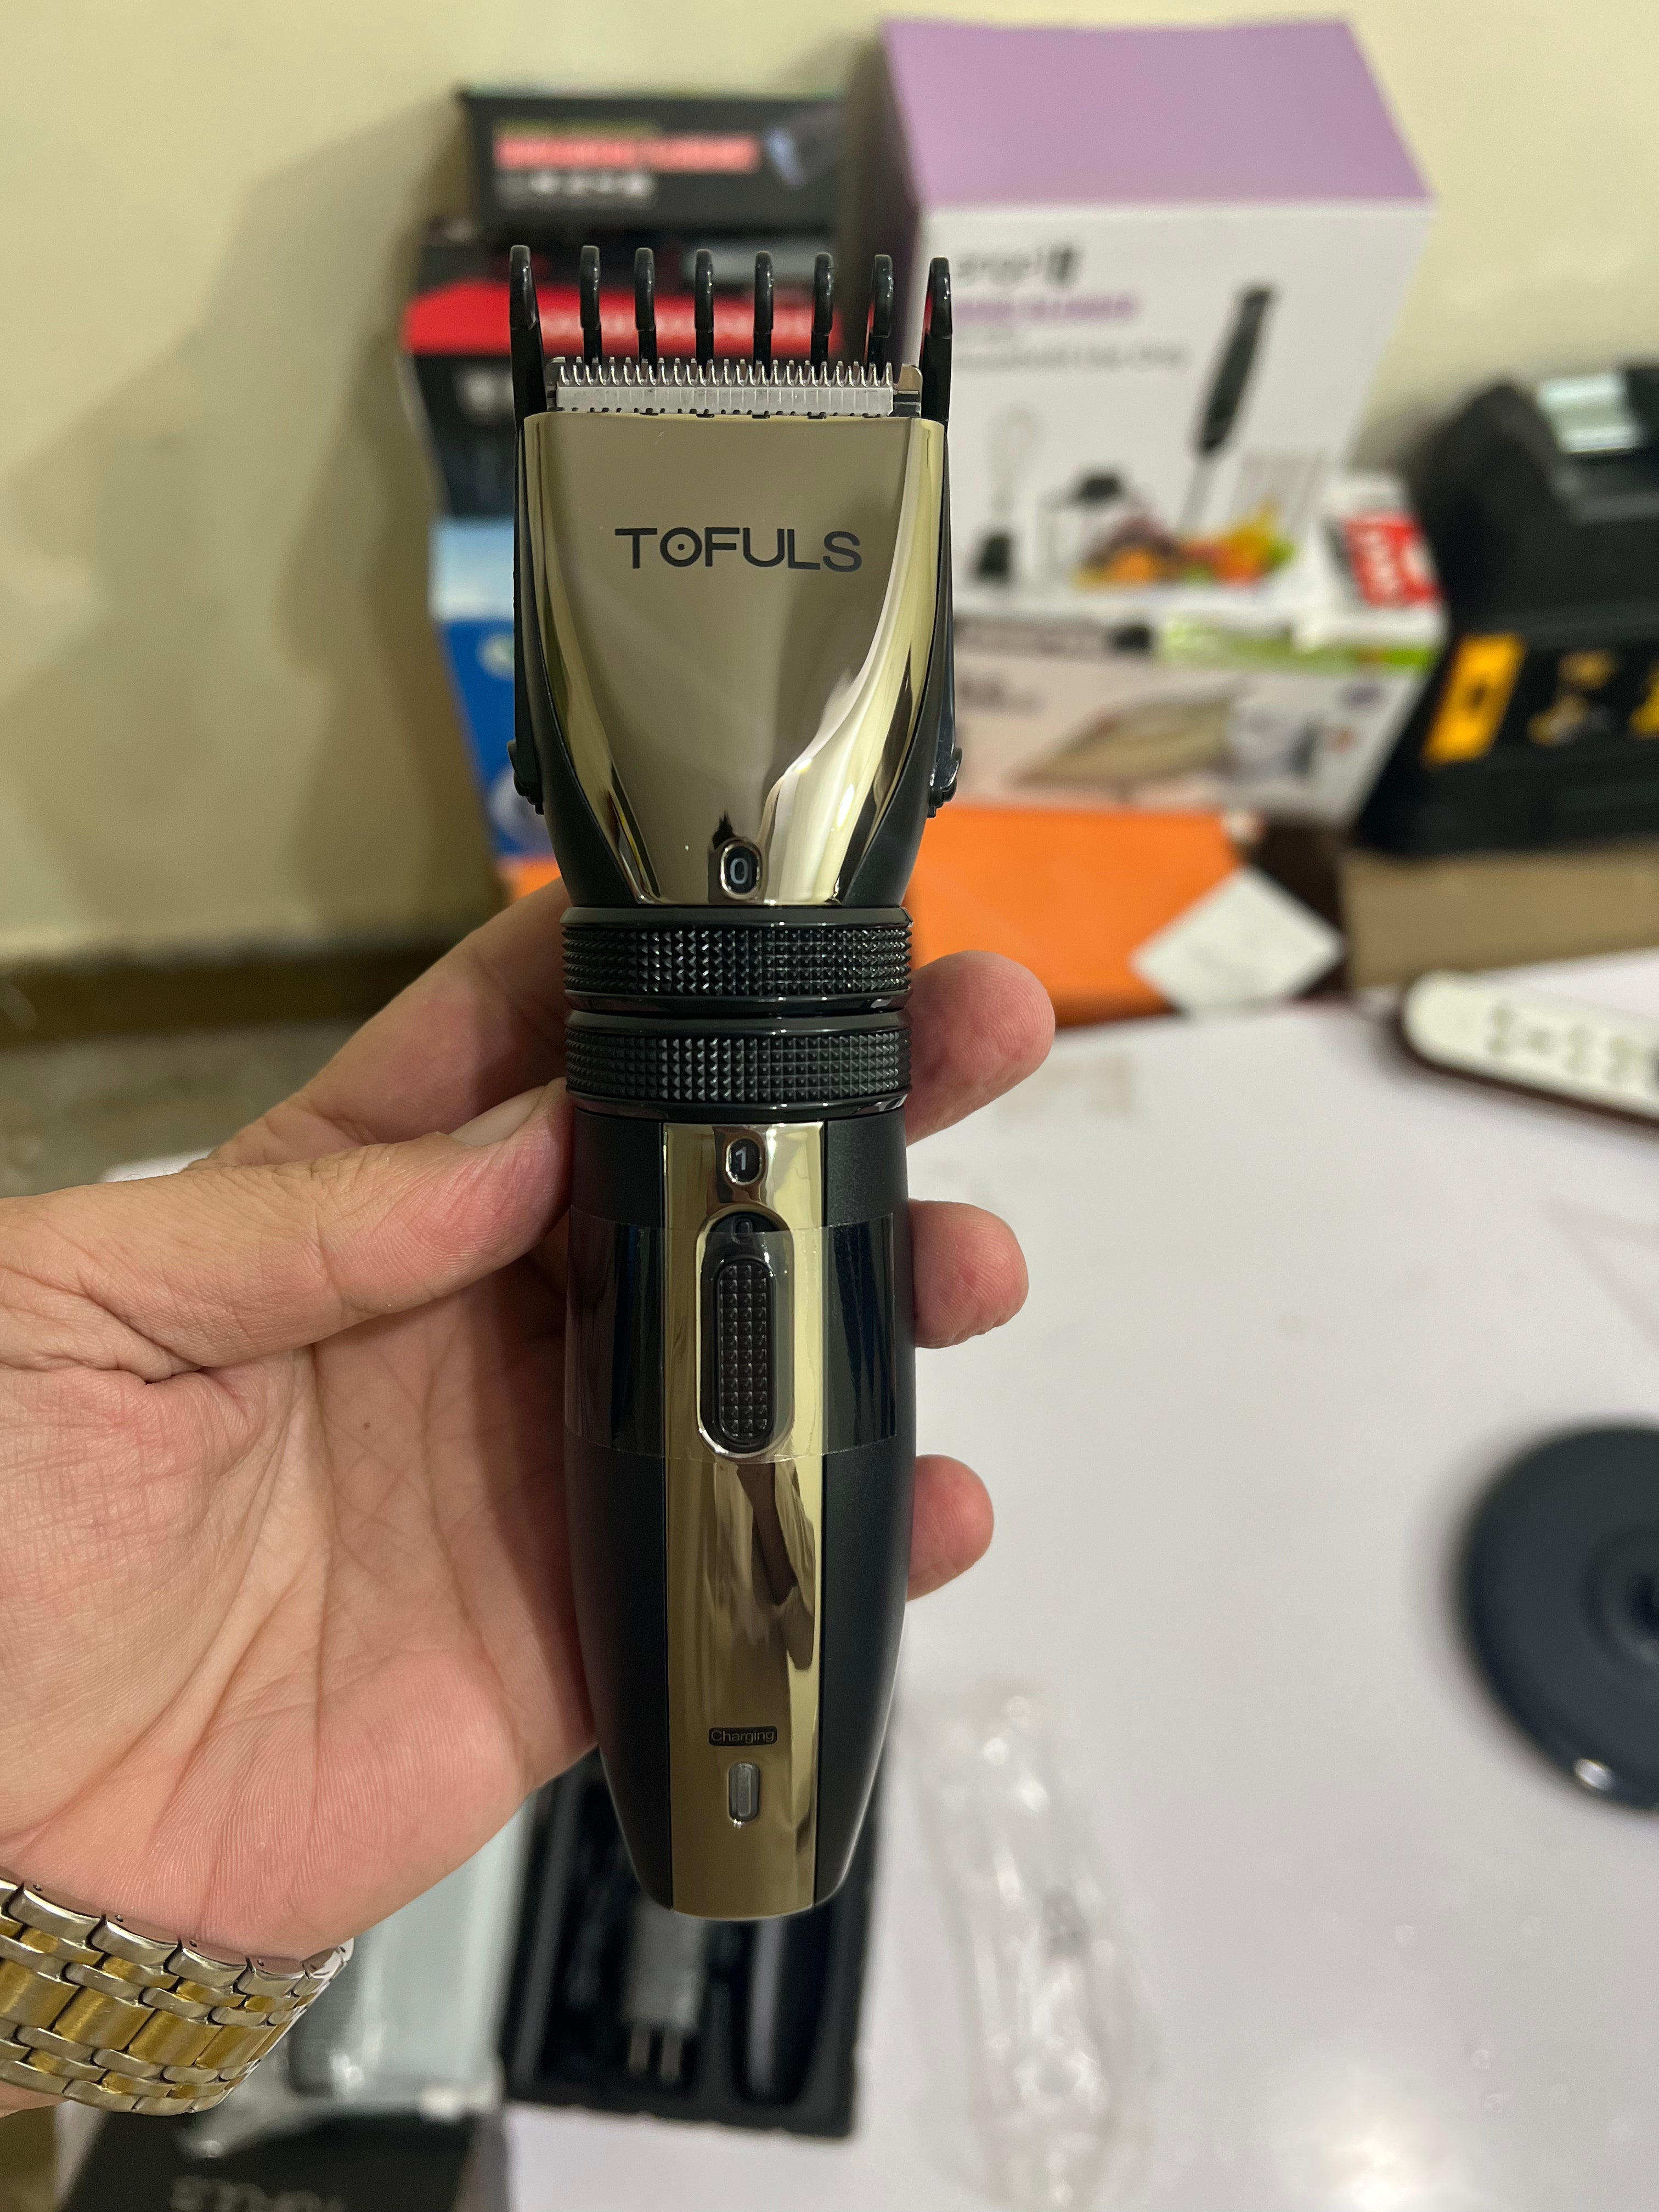 Amazon lot original tofuls hair trimmer